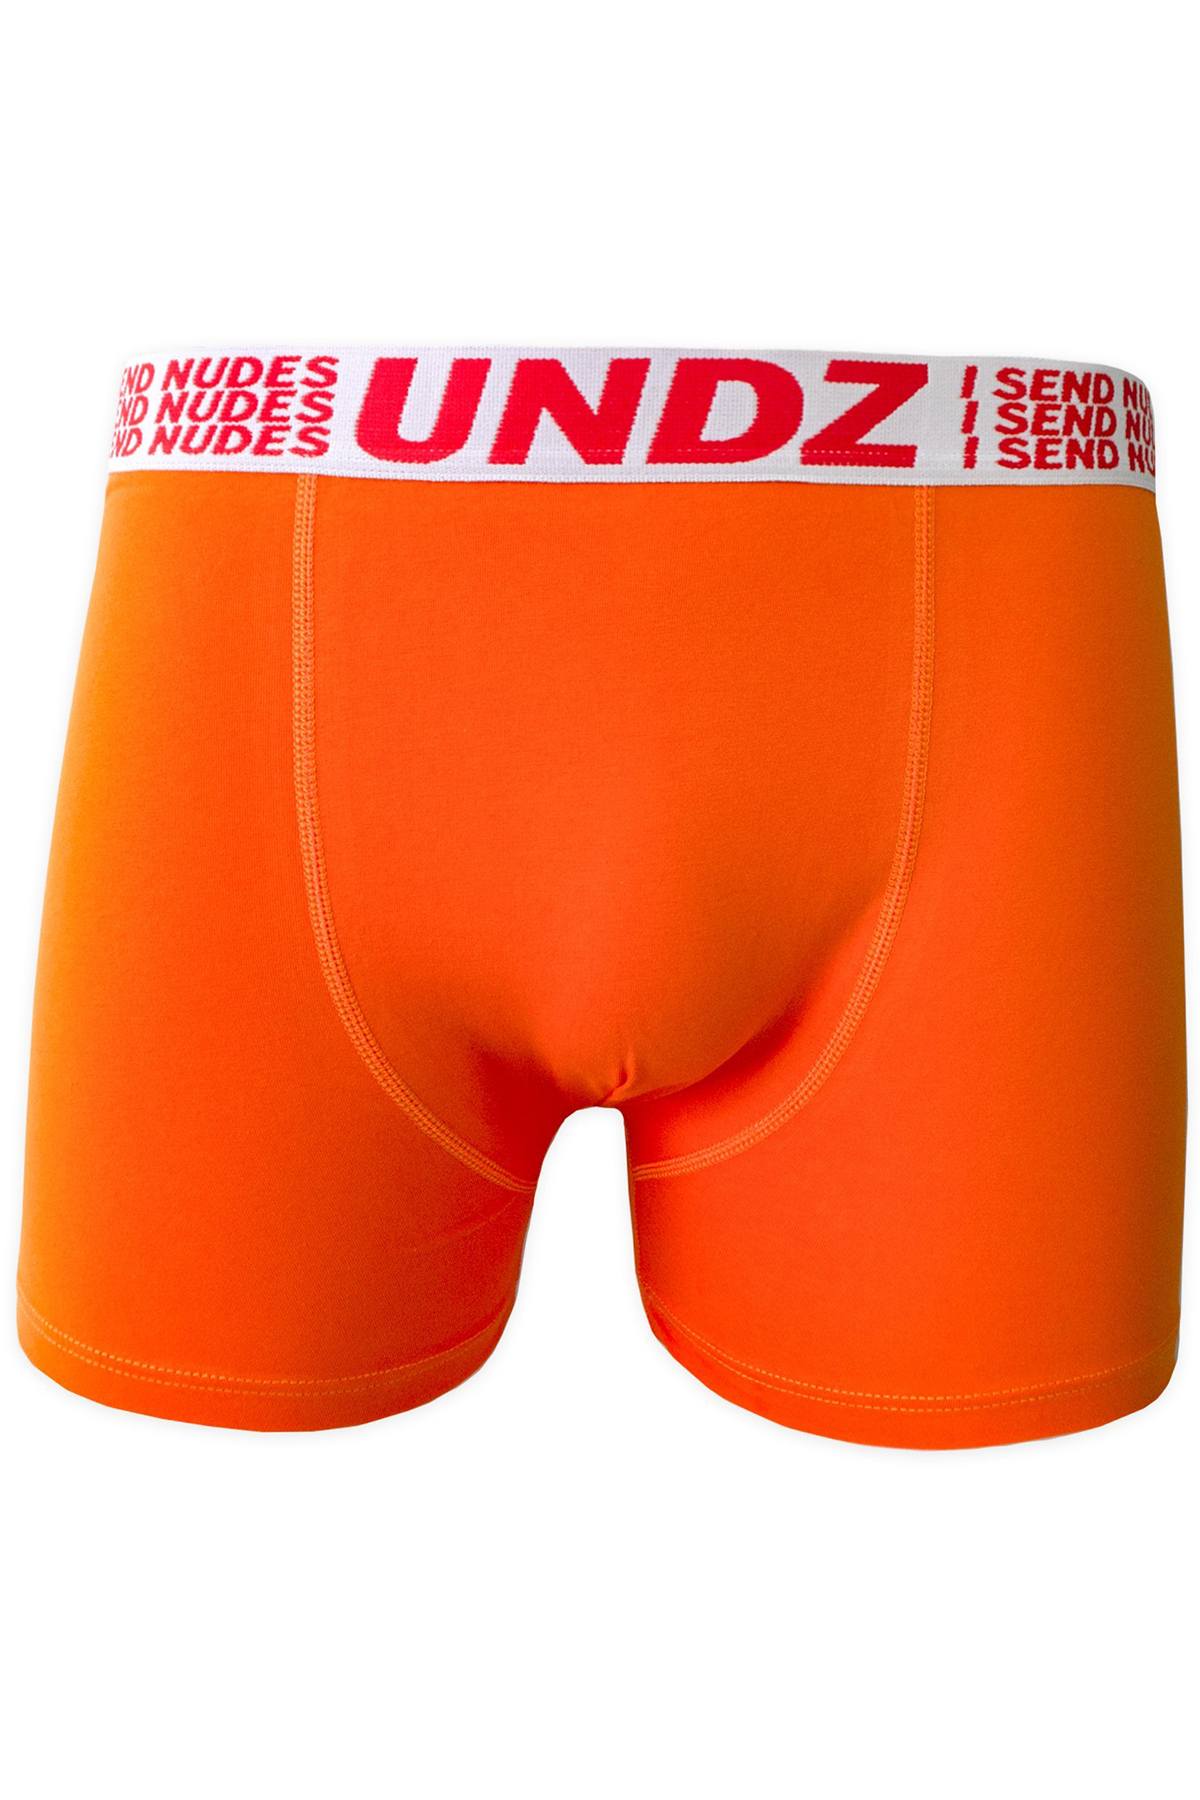 Undz I Send Nudes Orange Boxer Brief